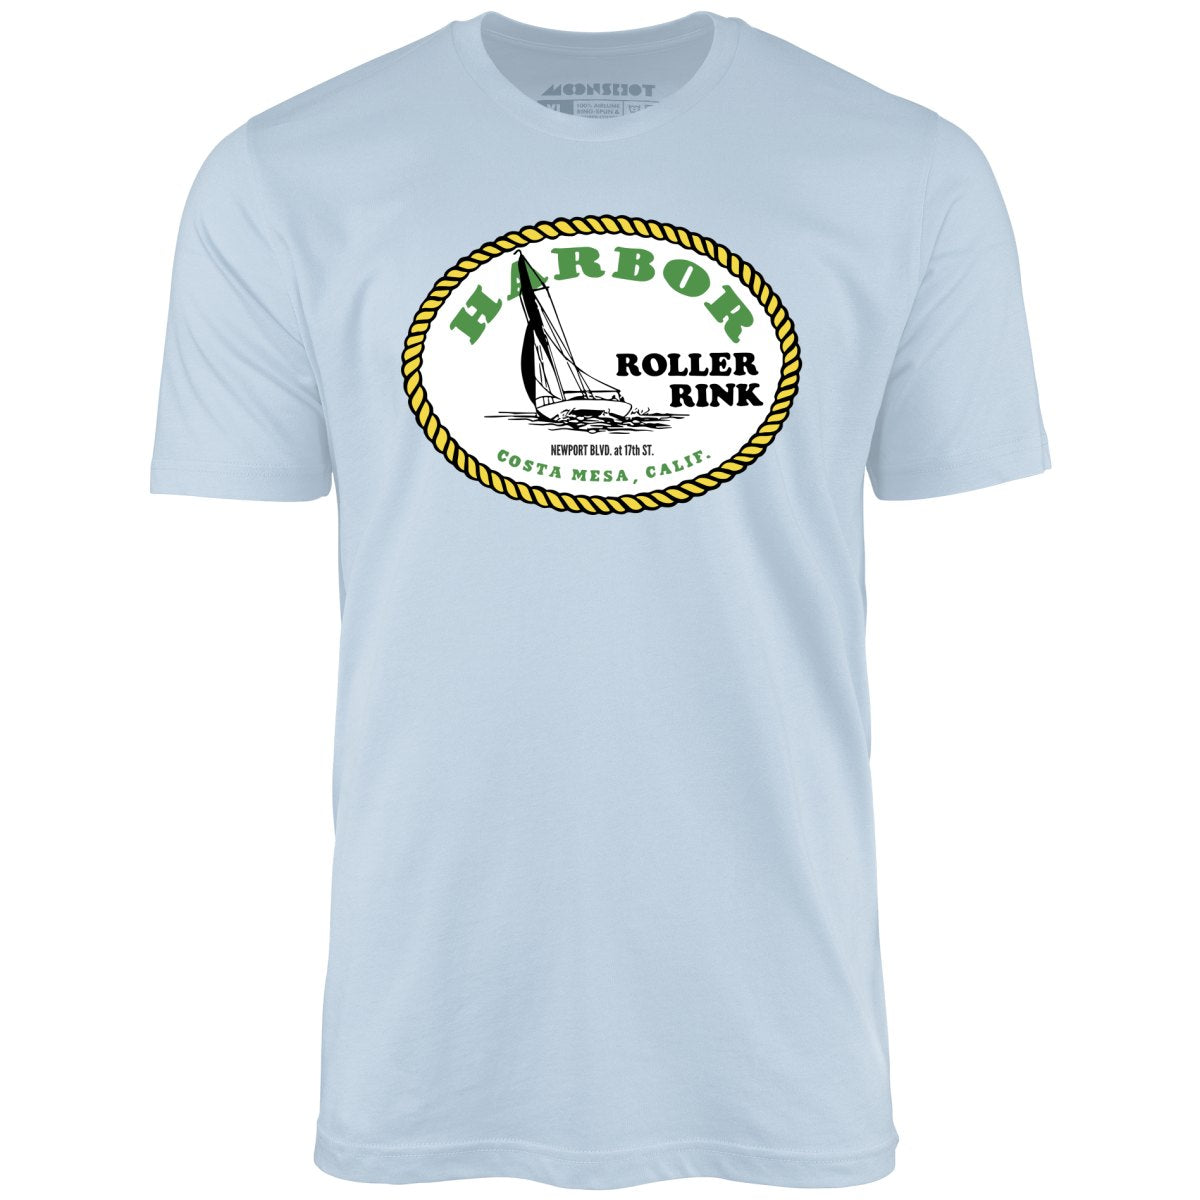 Harbor Roller Rink - Costa Mesa, CA - Vintage Roller Rink - Unisex T-Shirt